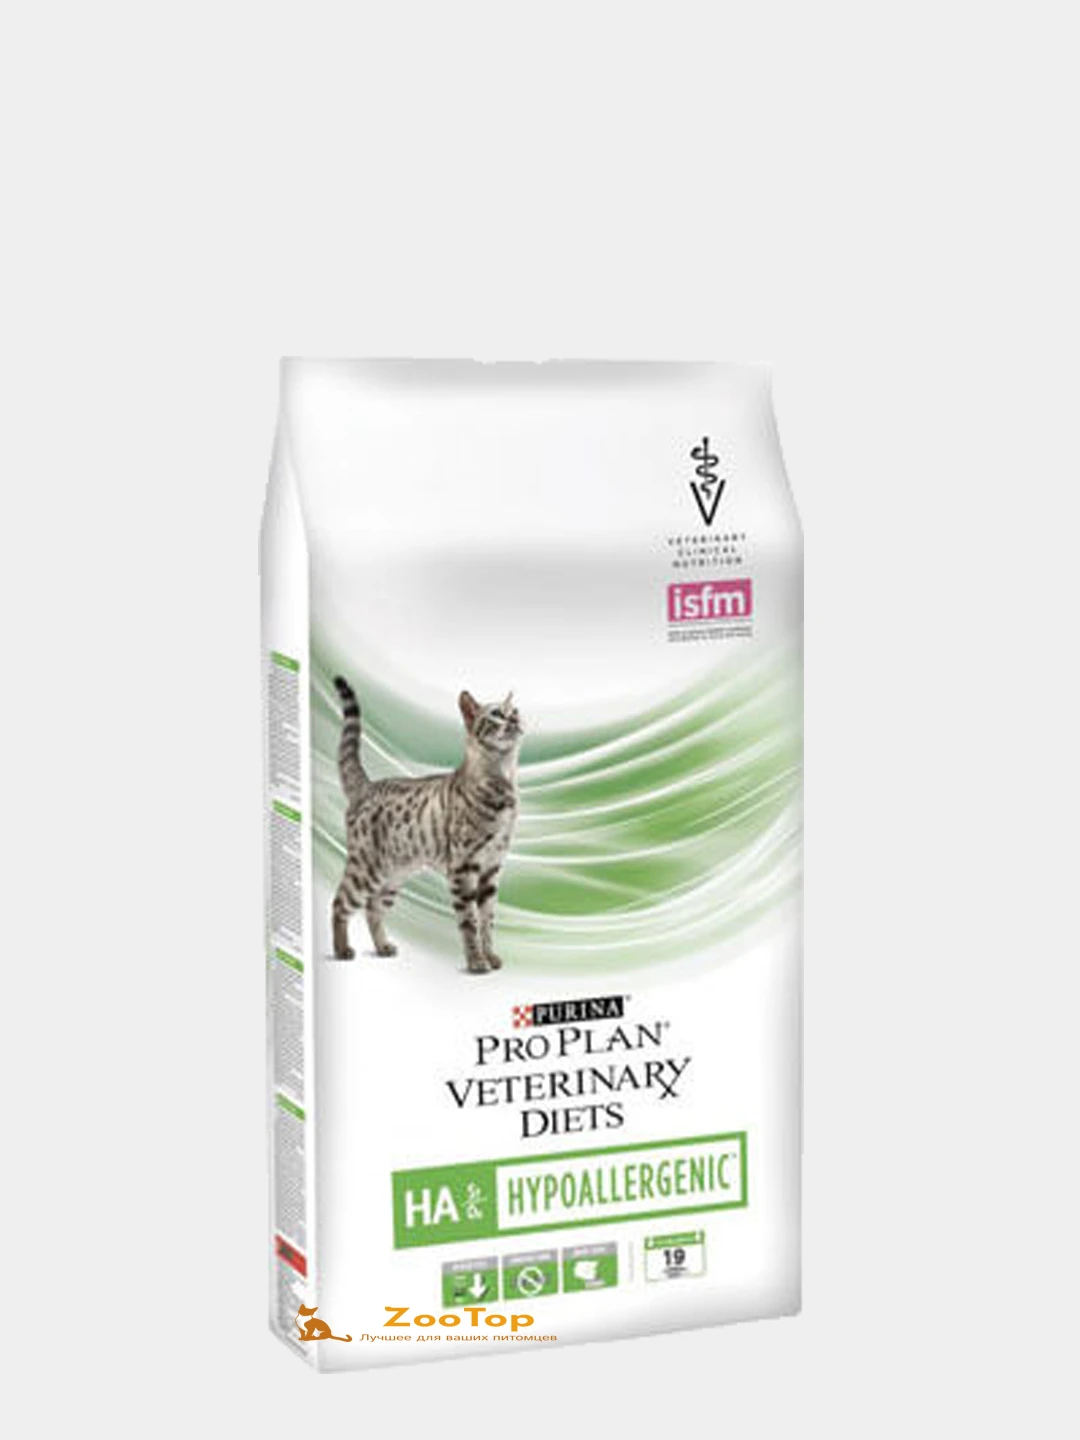 Pro plan аллергия. Сухой корм для кошек Pro Plan Veterinary Diets ha Hypoallergenic, гипоаллергенный, 1,3кг. Purina лечебный корм Пурина. Проплан диабетик для кошек сухой. Purina Hypoallergenic для кошек.